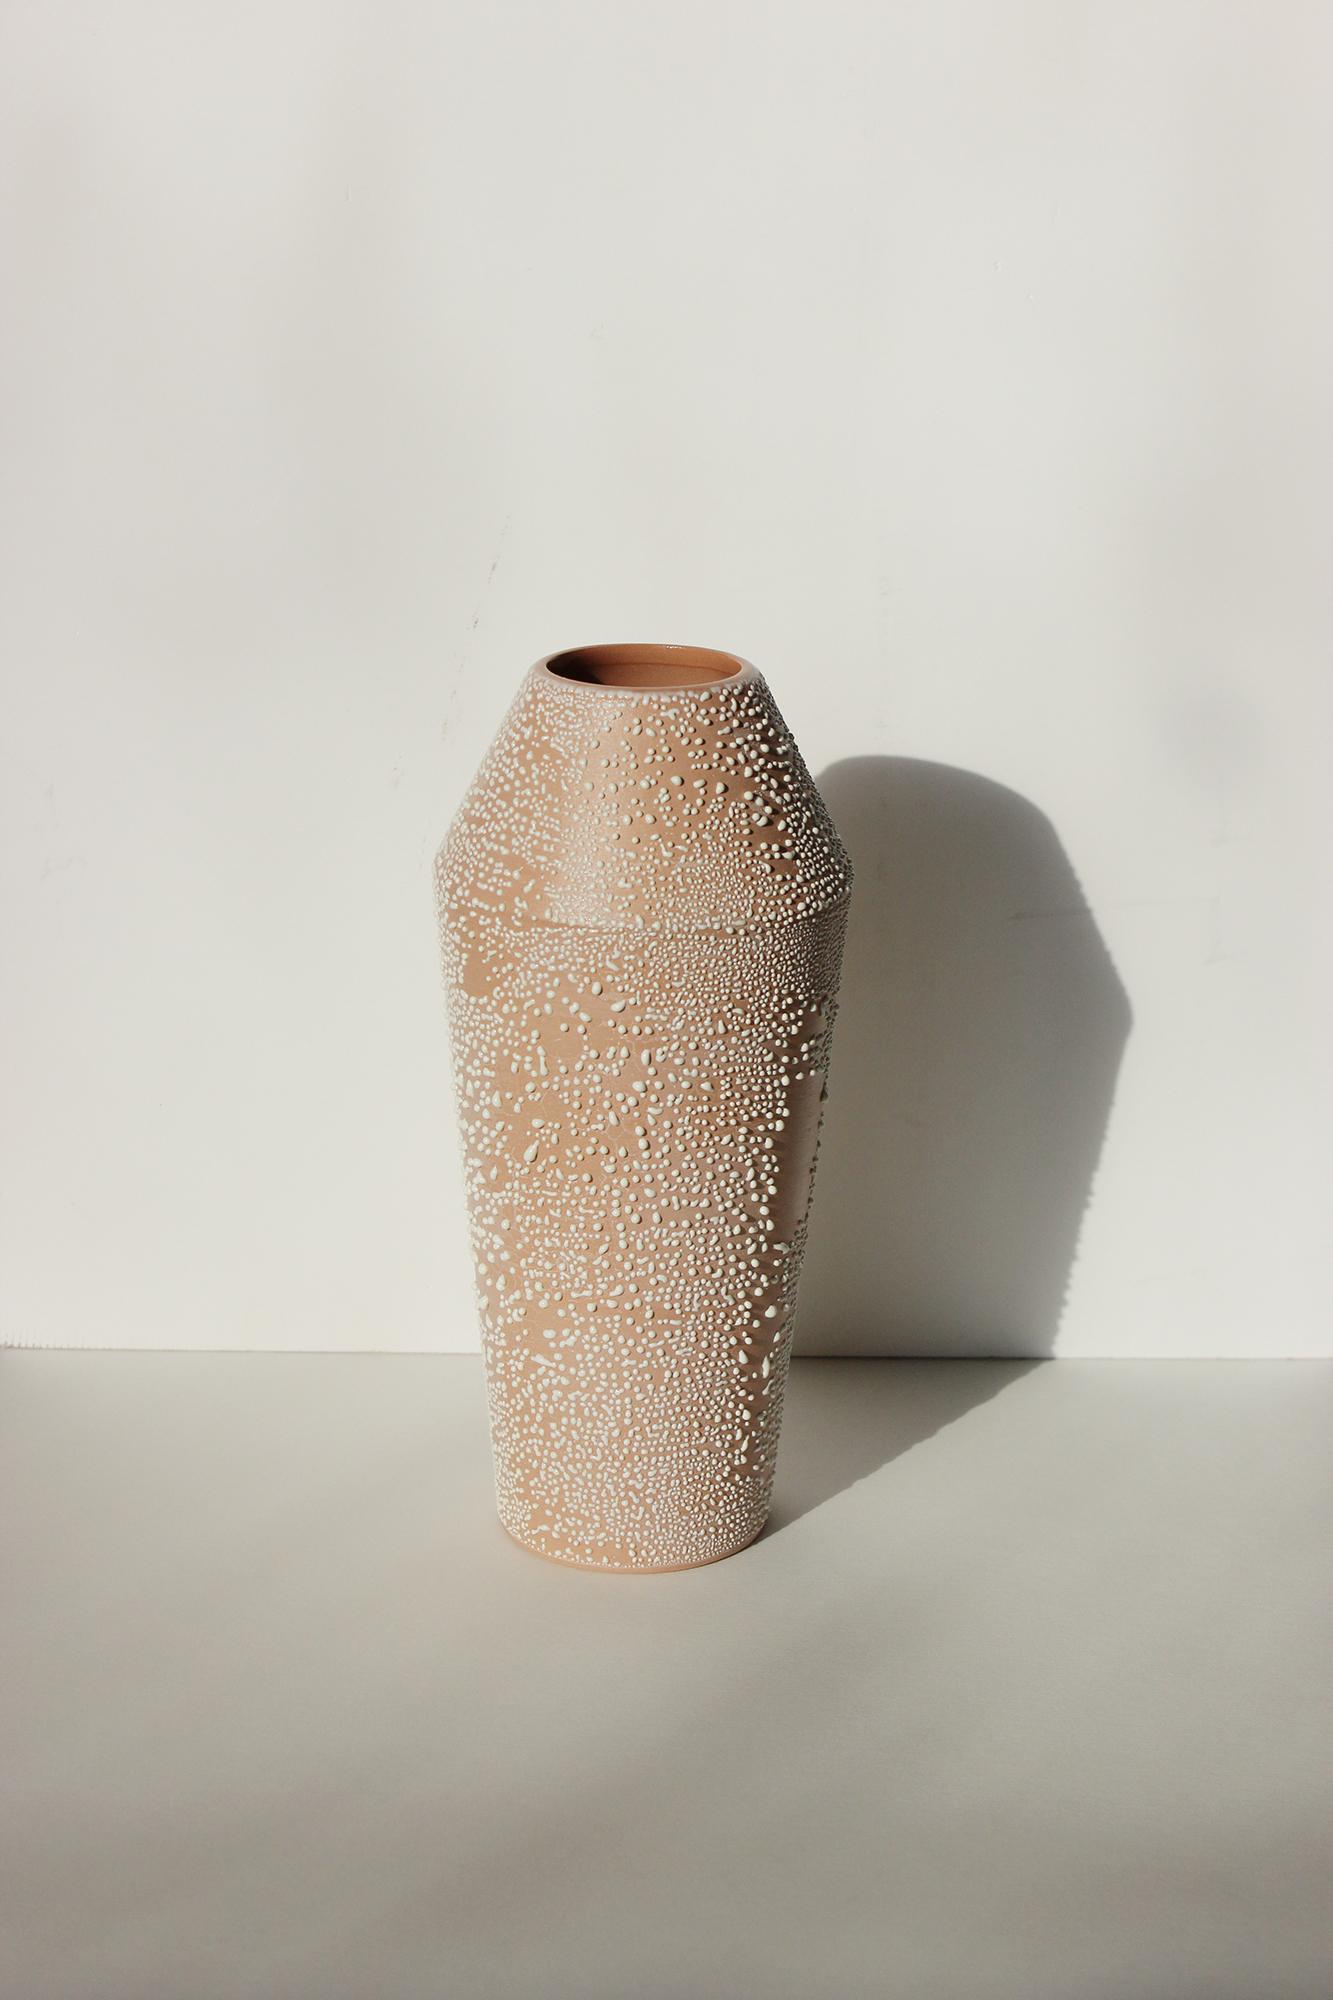 Modern Contemporary Large Dew Vase #1 White Ceramic and Glaze, Handmade For Sale